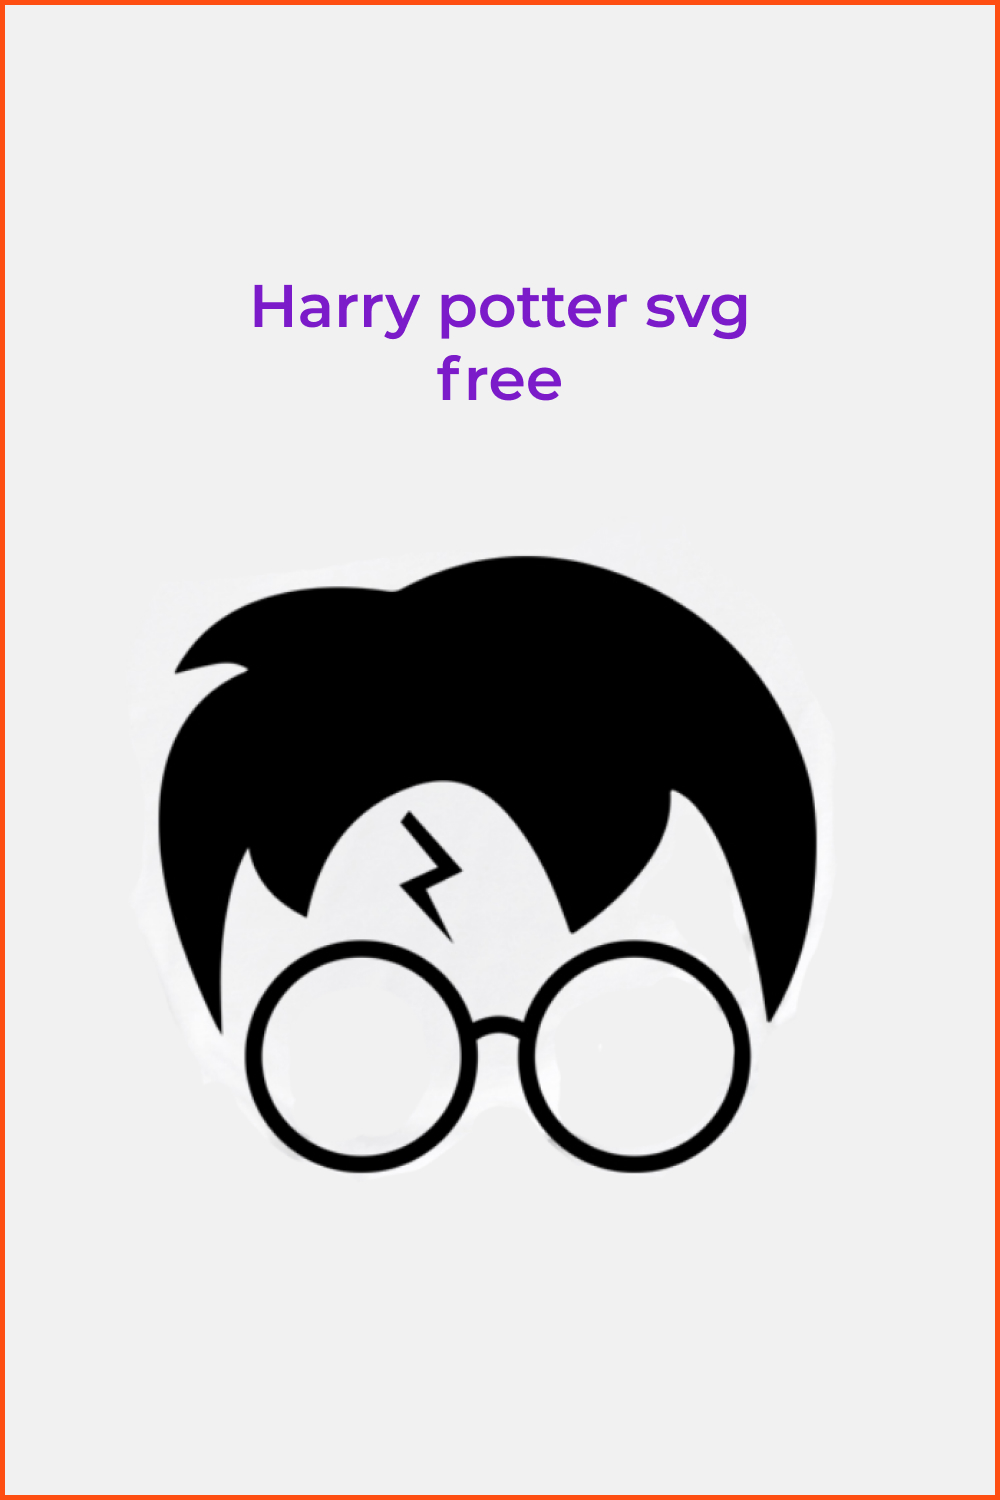 Harry Potter head silhouette image.